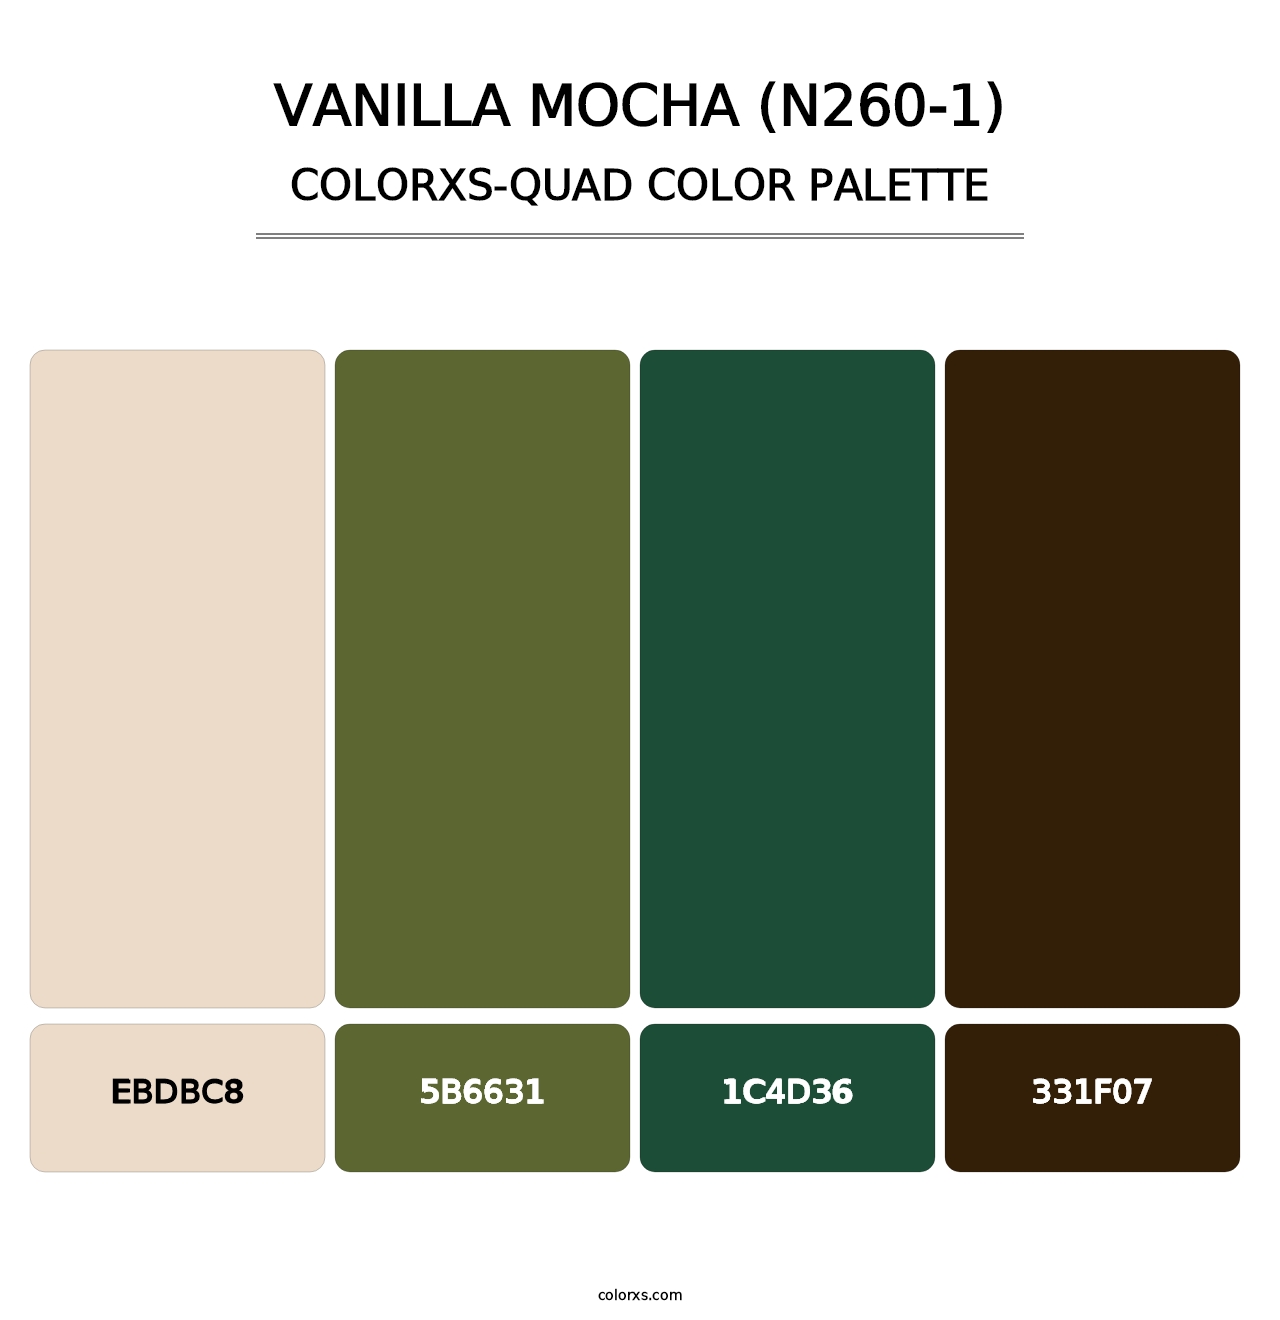 Vanilla Mocha (N260-1) - Colorxs Quad Palette